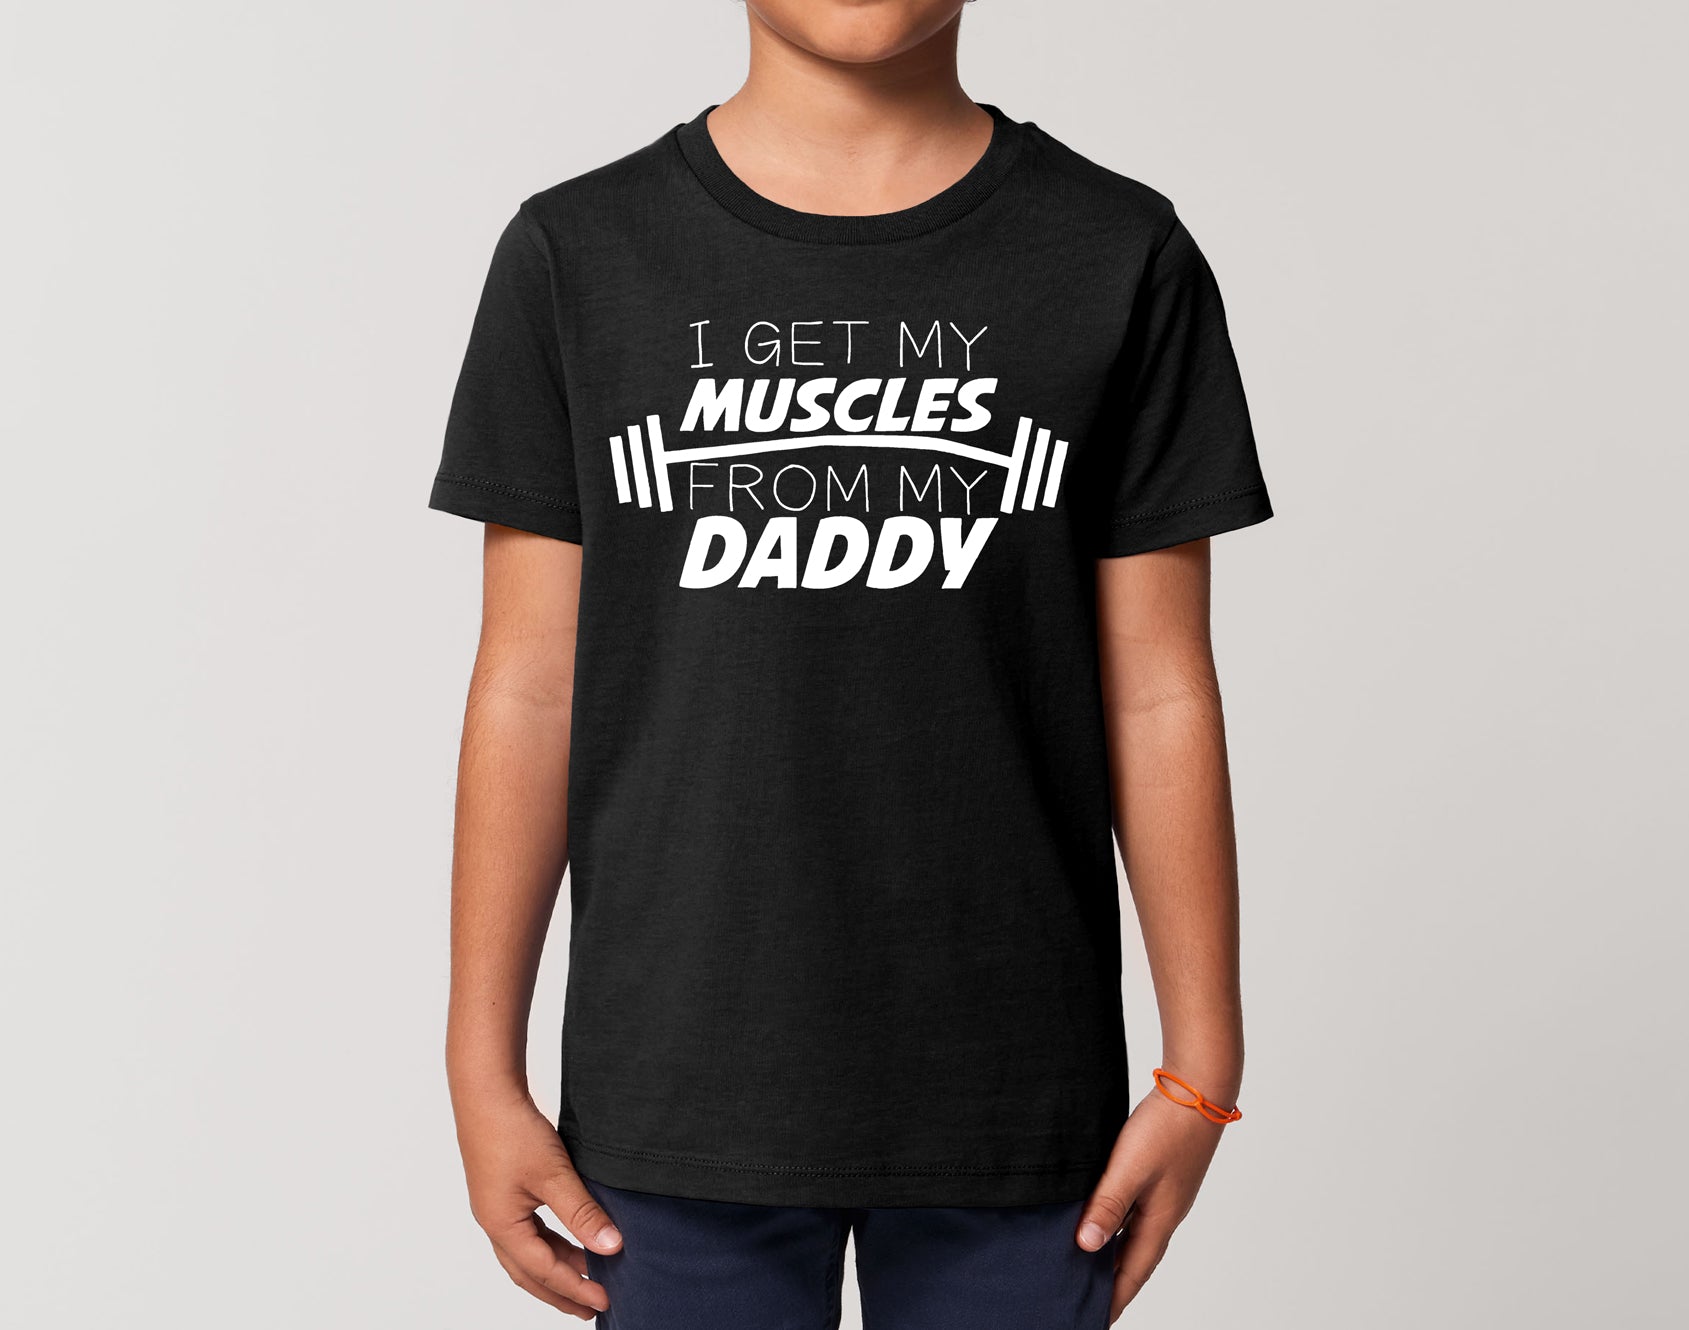 Gym Dad Shirt 